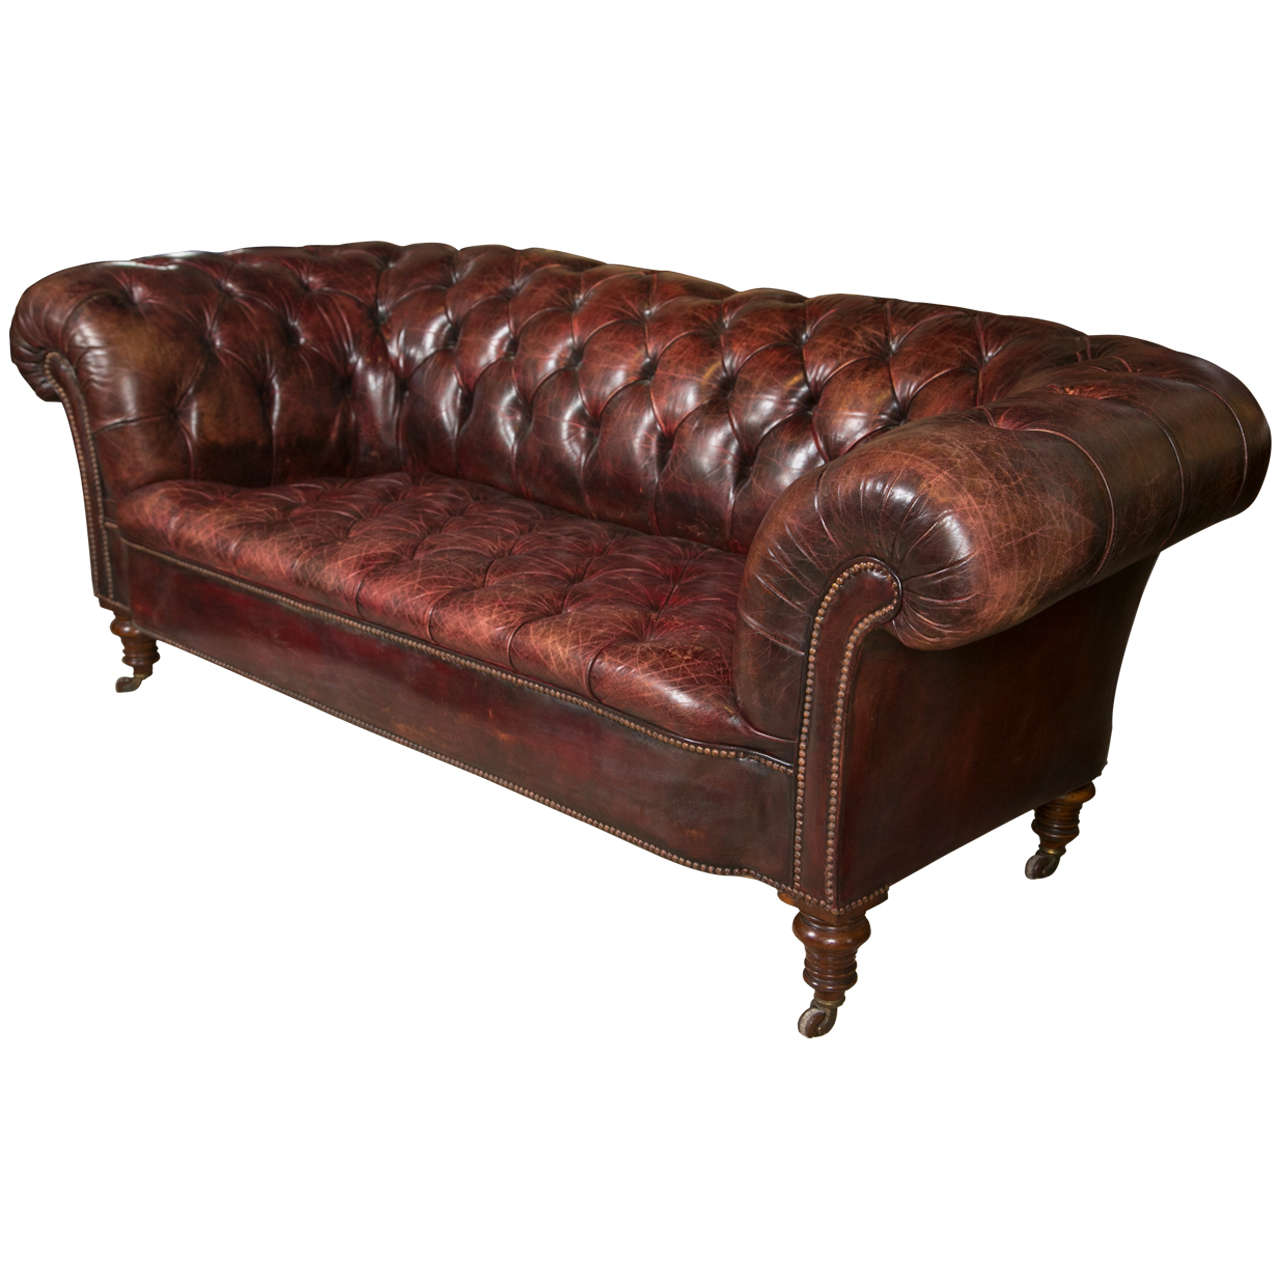 English Tufted Leather Sofa, circa 1900 For Sale